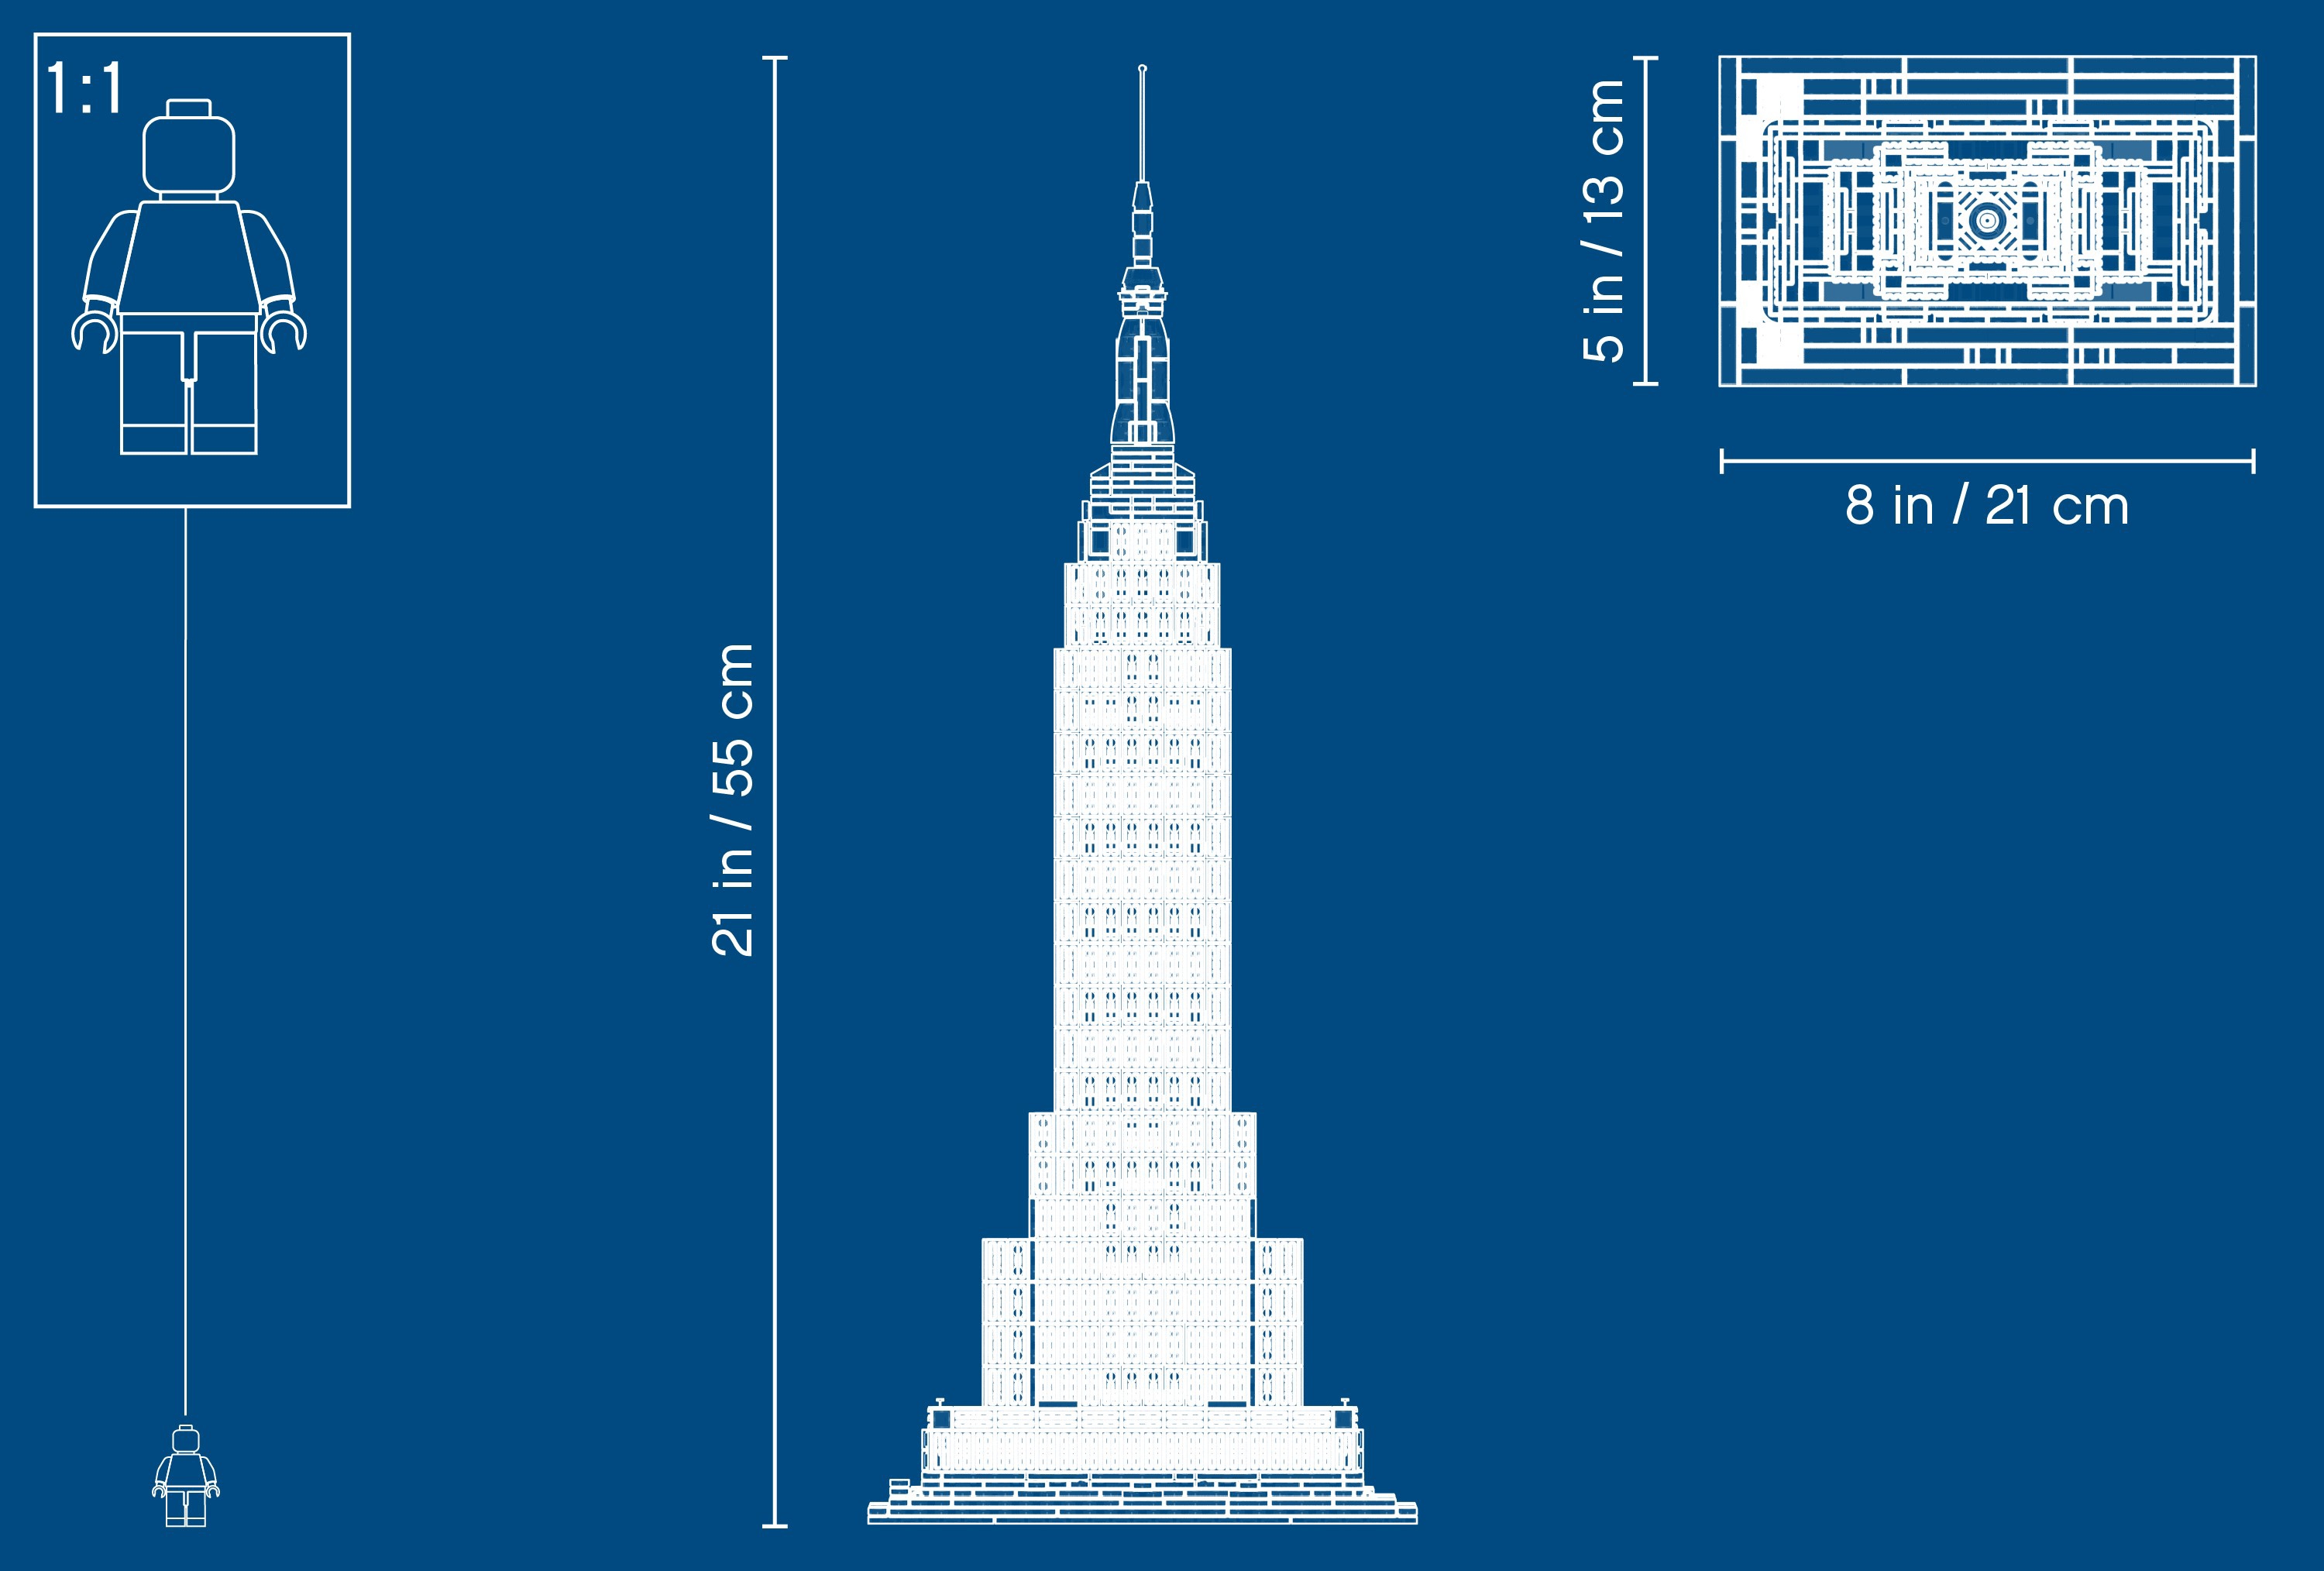 LEGO Architecture Empire State Building set 21046 – Brick Loot